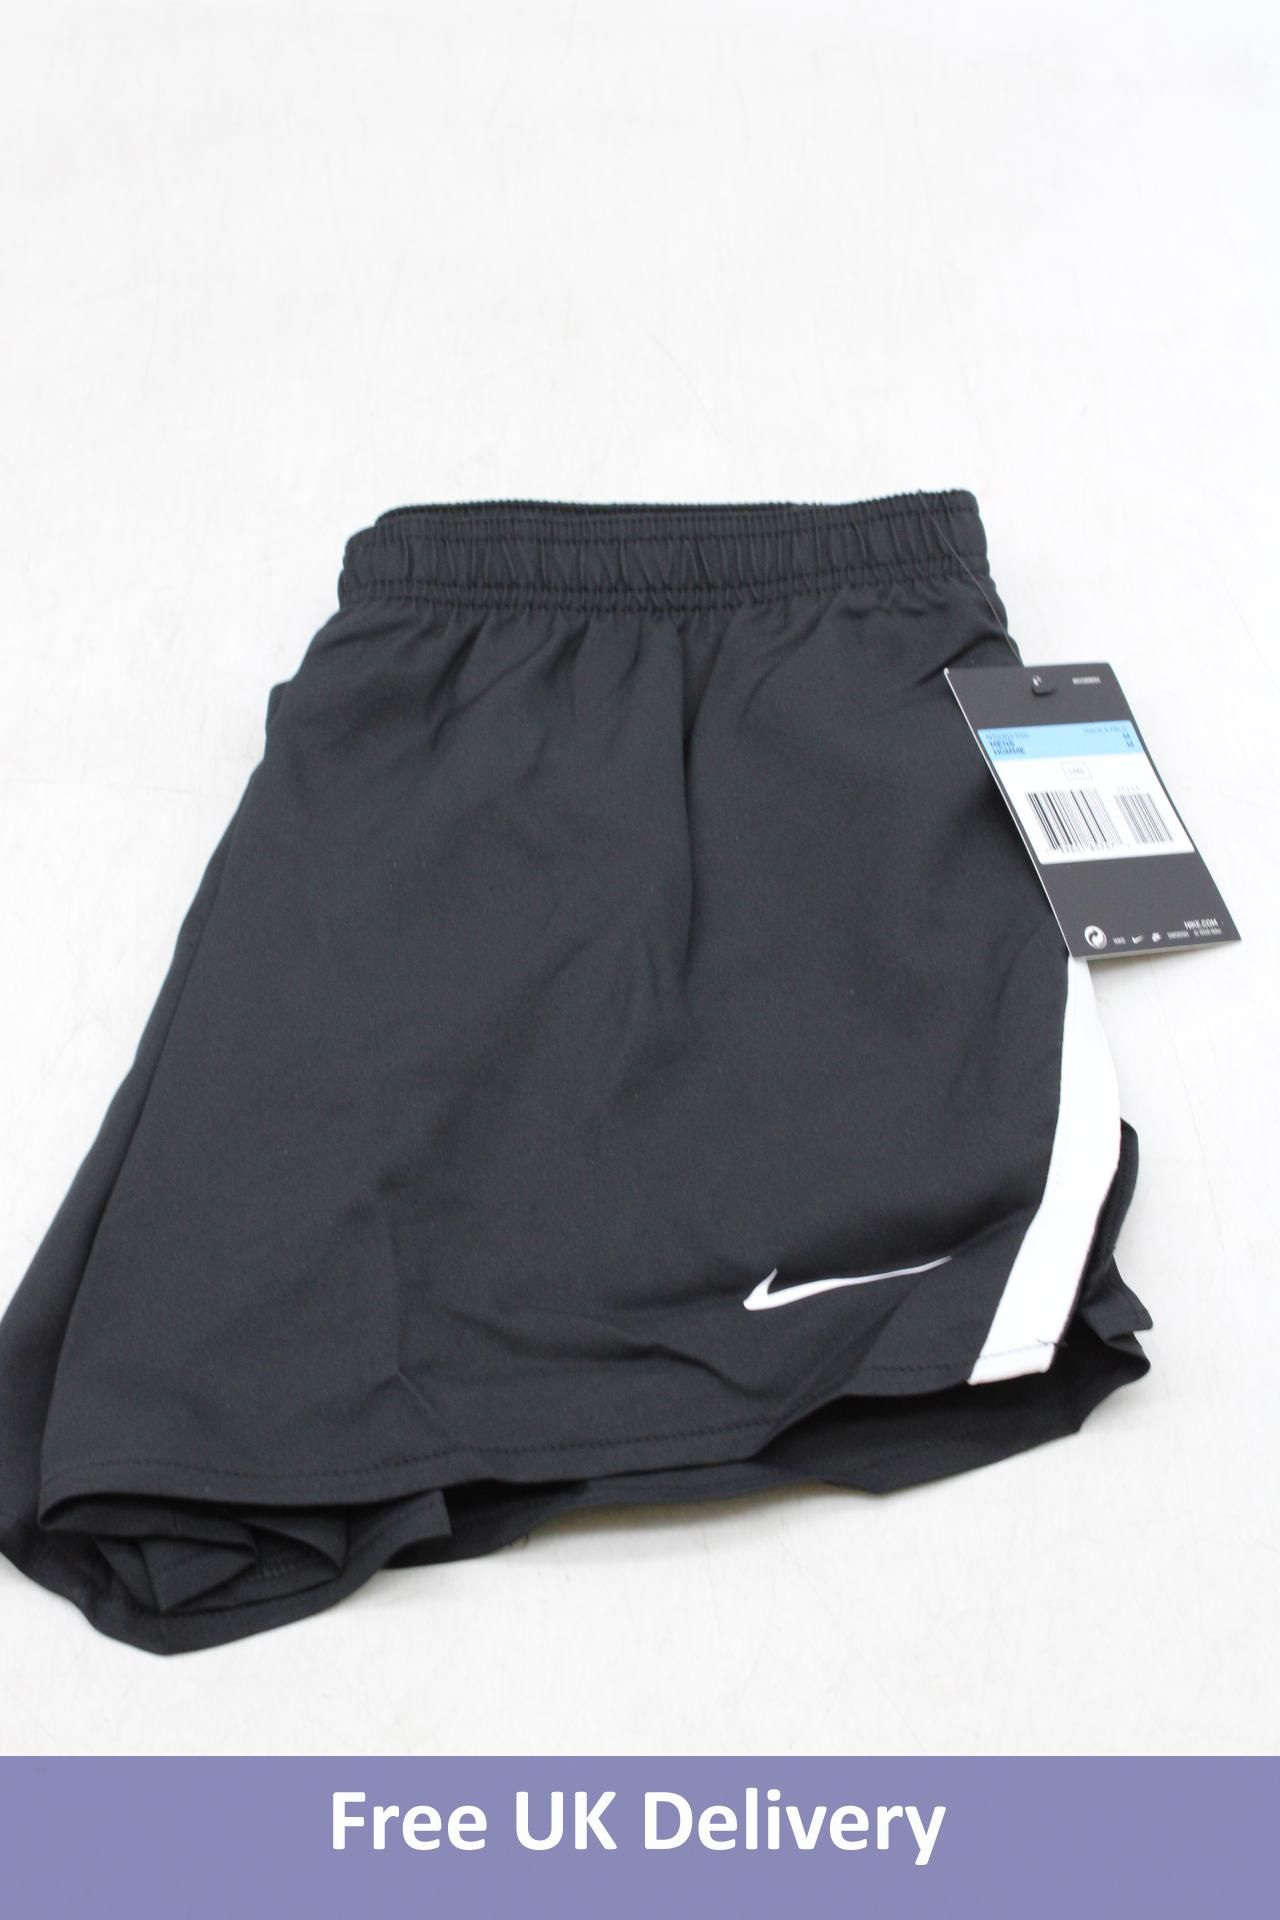 Five Pairs of Nike Track & Field 2" Running Shorts, Black, Medium